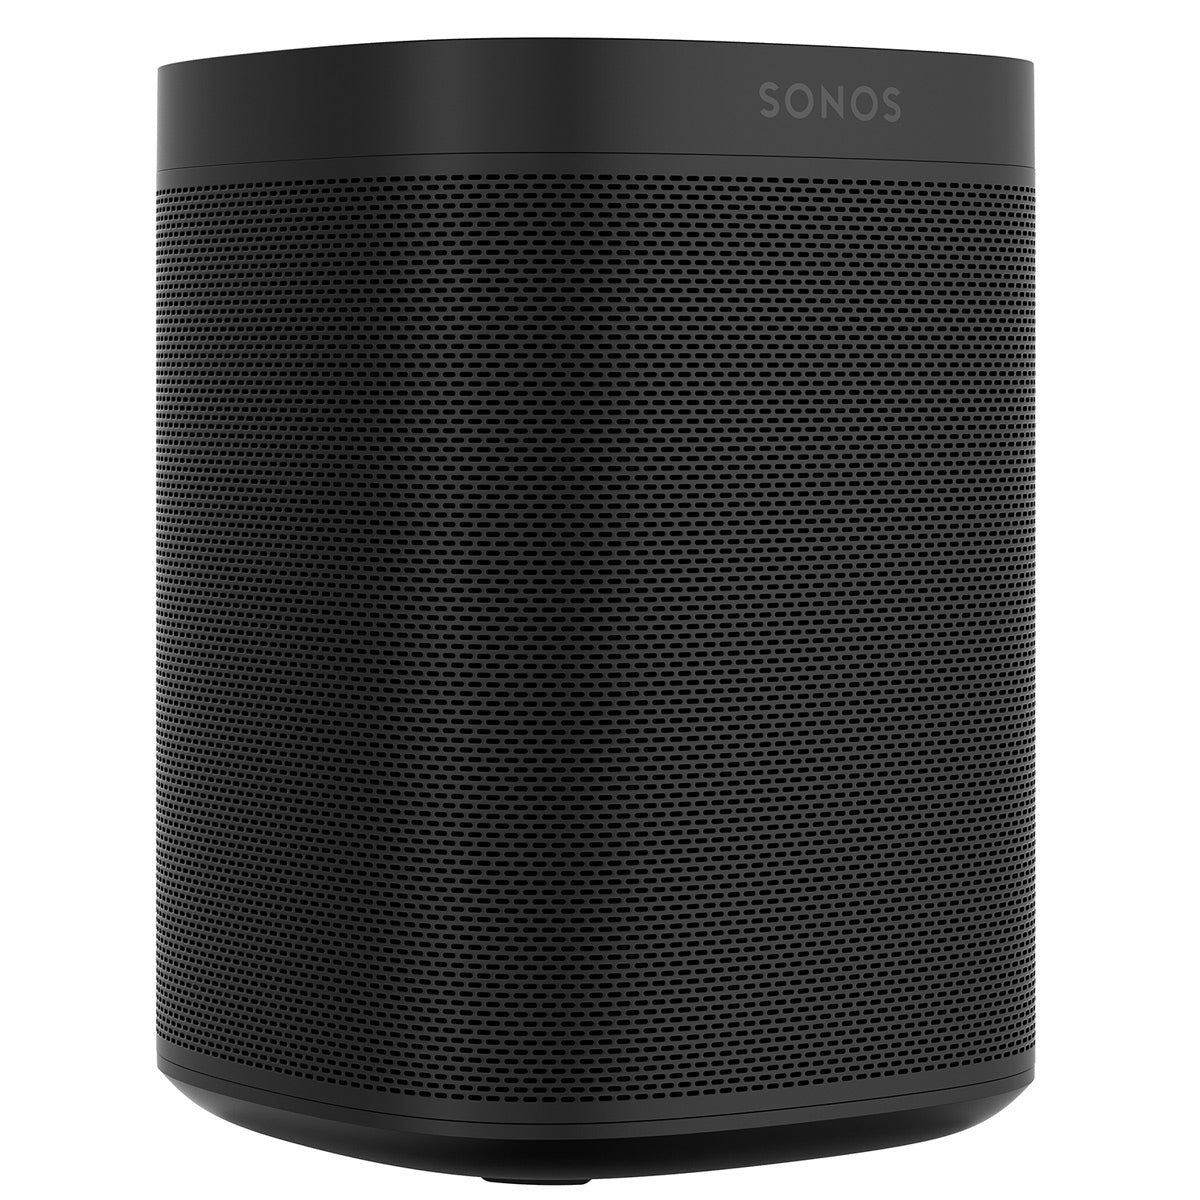 Sonos Three Room Set with Sonos One Gen 2 - Smart Speaker with Voice Control Built-In (Black)